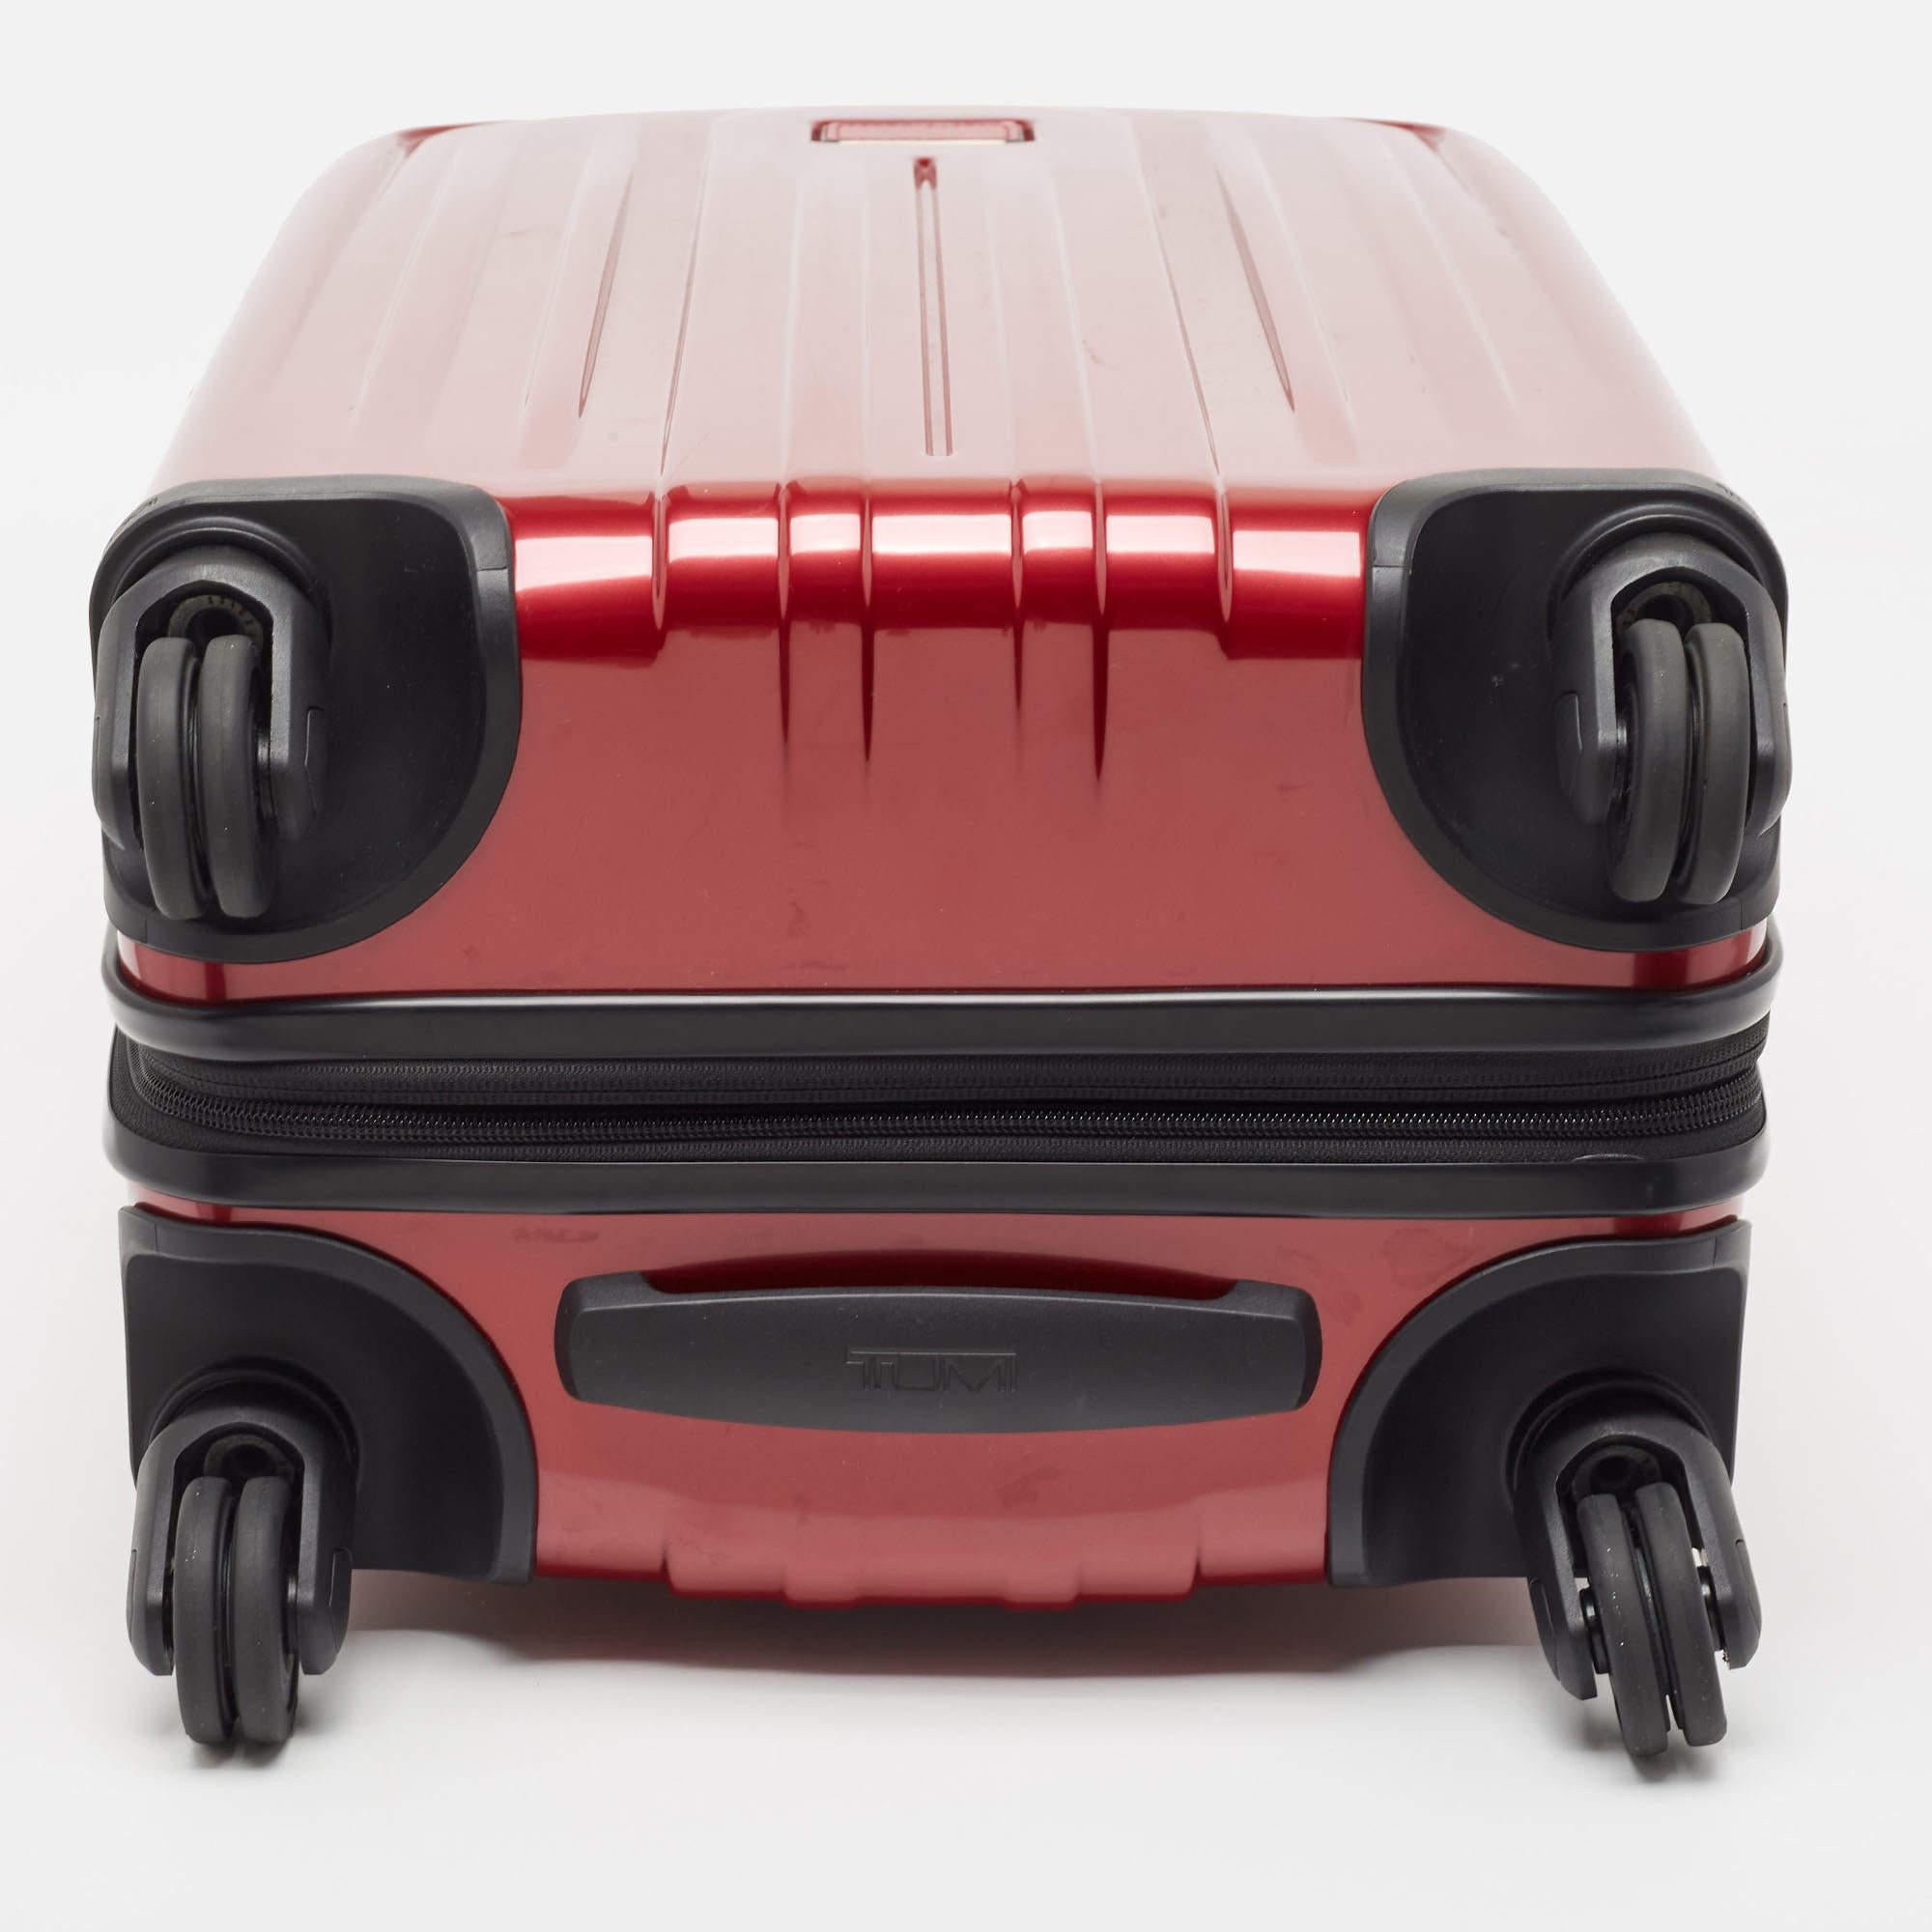 TUMI Rote 4 Rädern V4 International Expandable Carry On Luggage, ausziehbar im Angebot 4